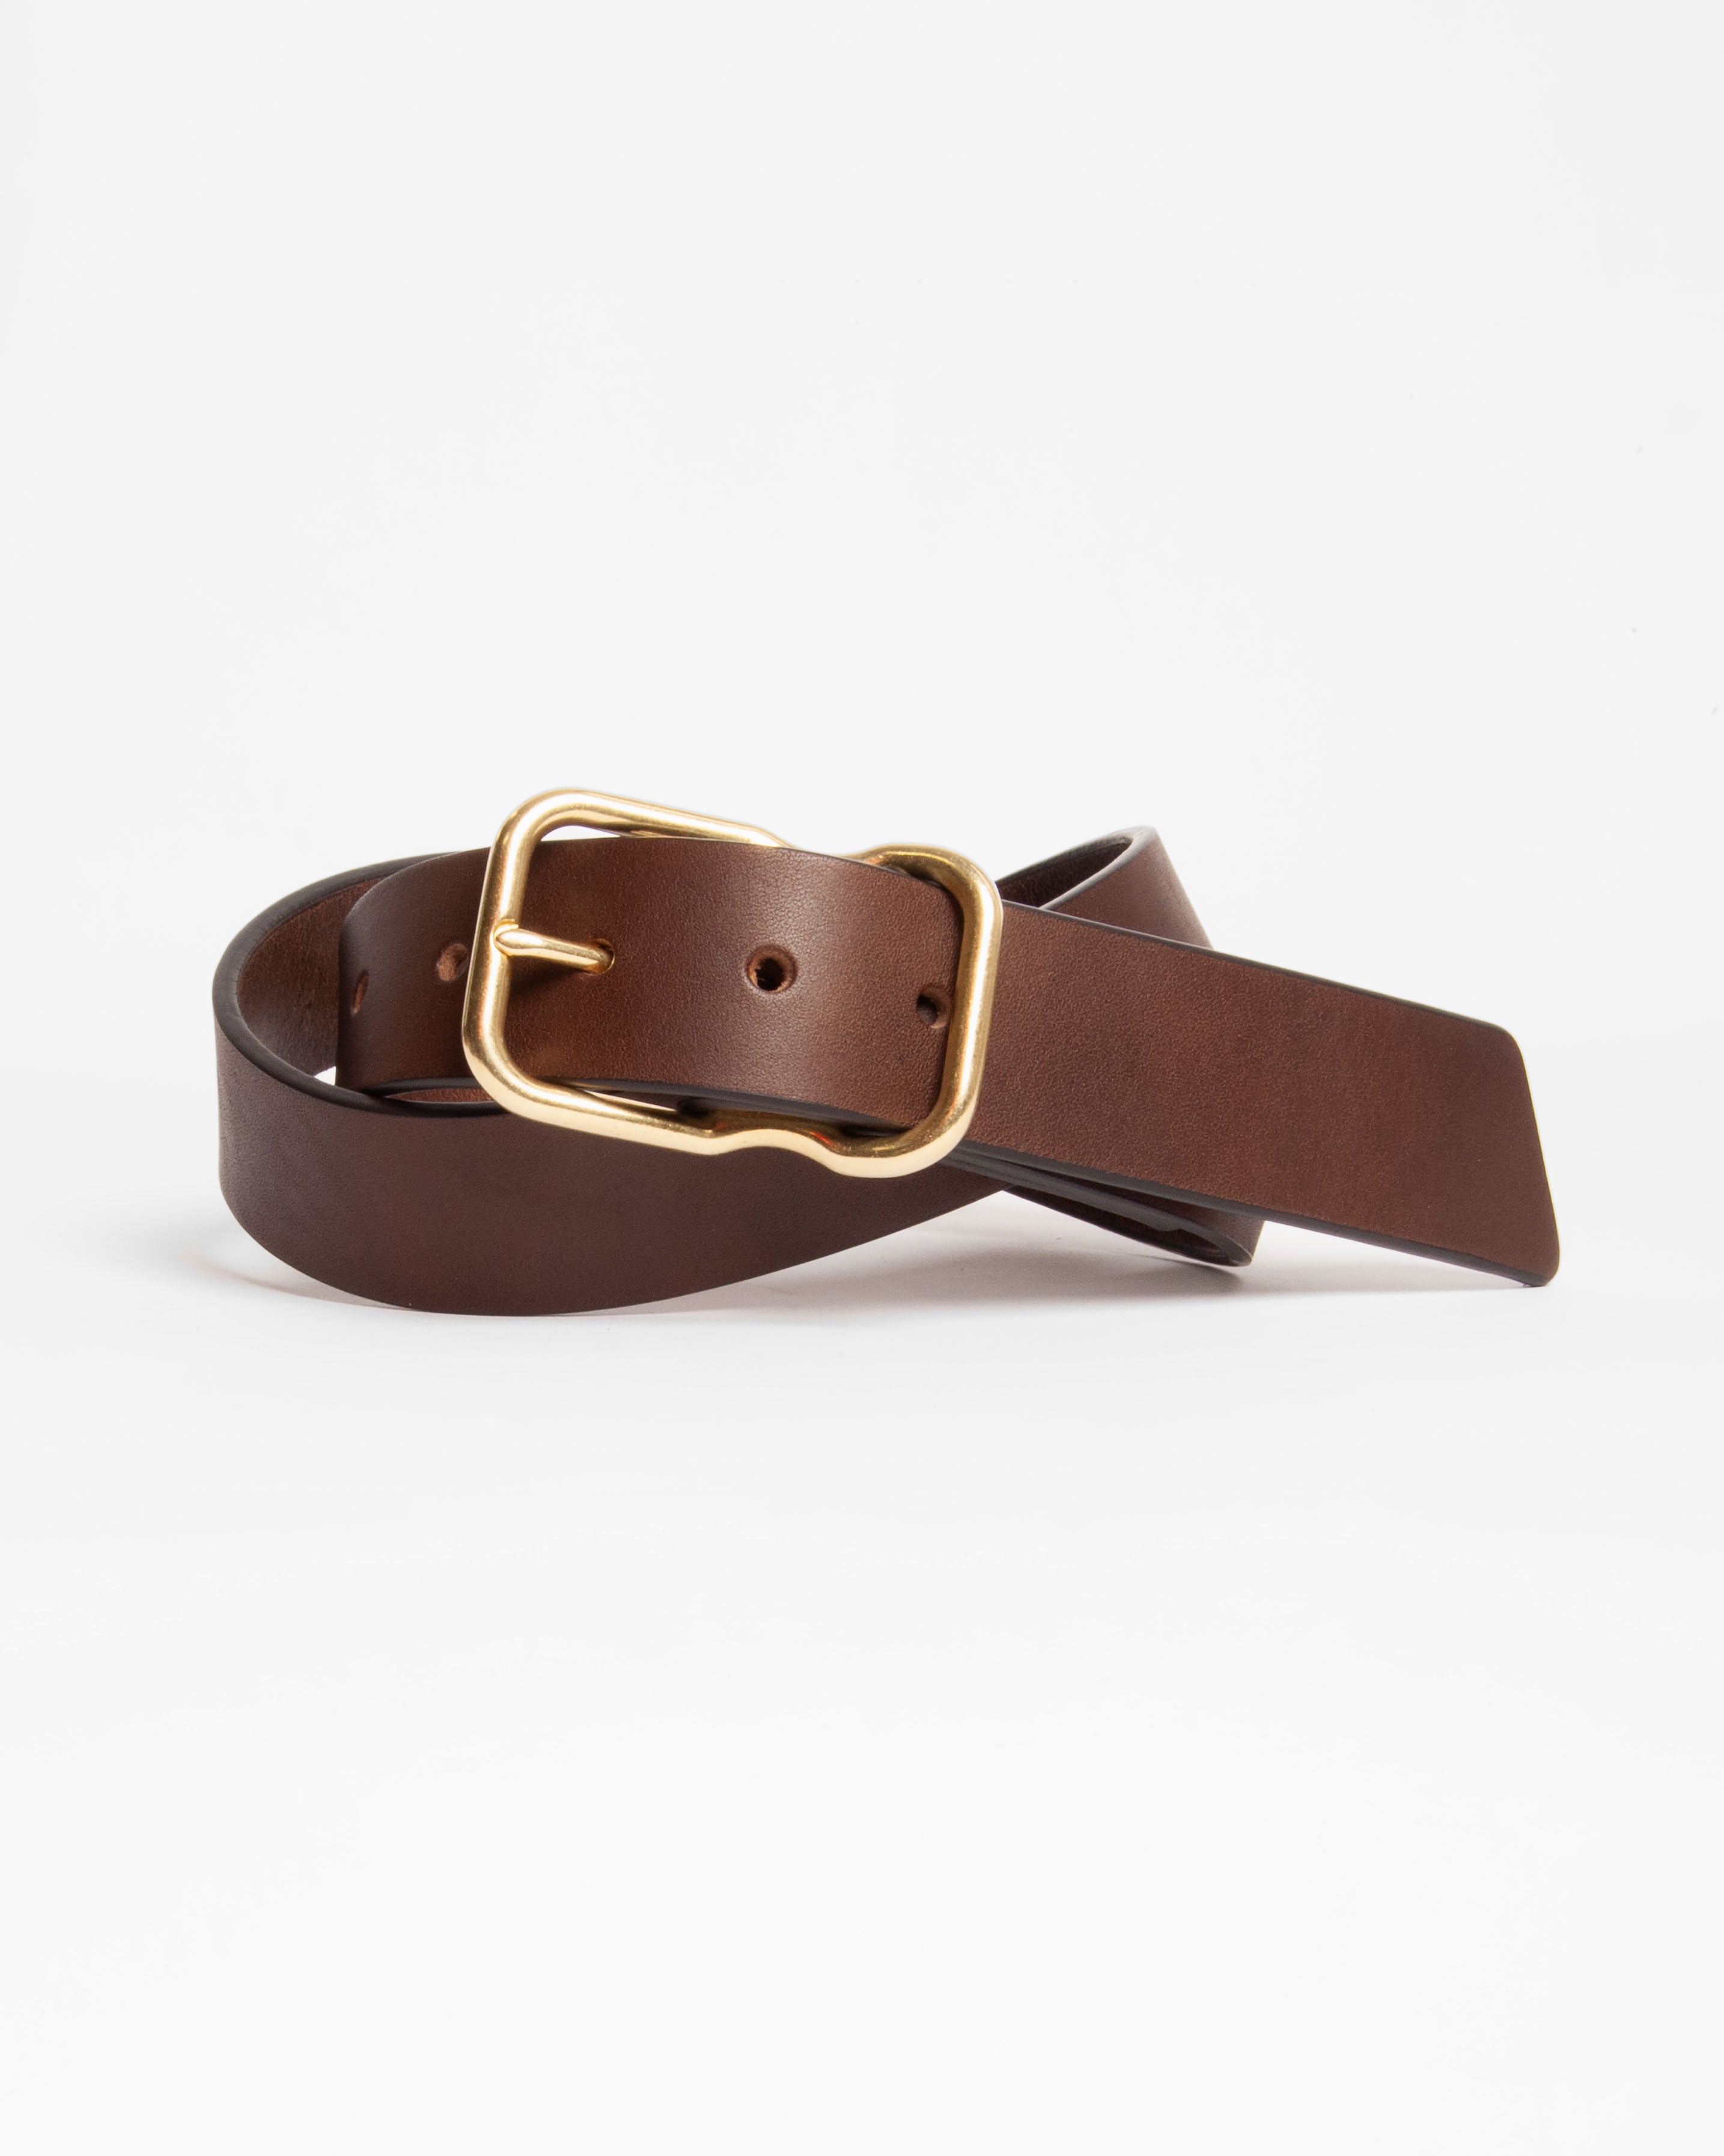 Vintage Plum Brown Grommets Soft Leather Belt Solid Brass Buckle, 32-35  82-90cm -  Canada